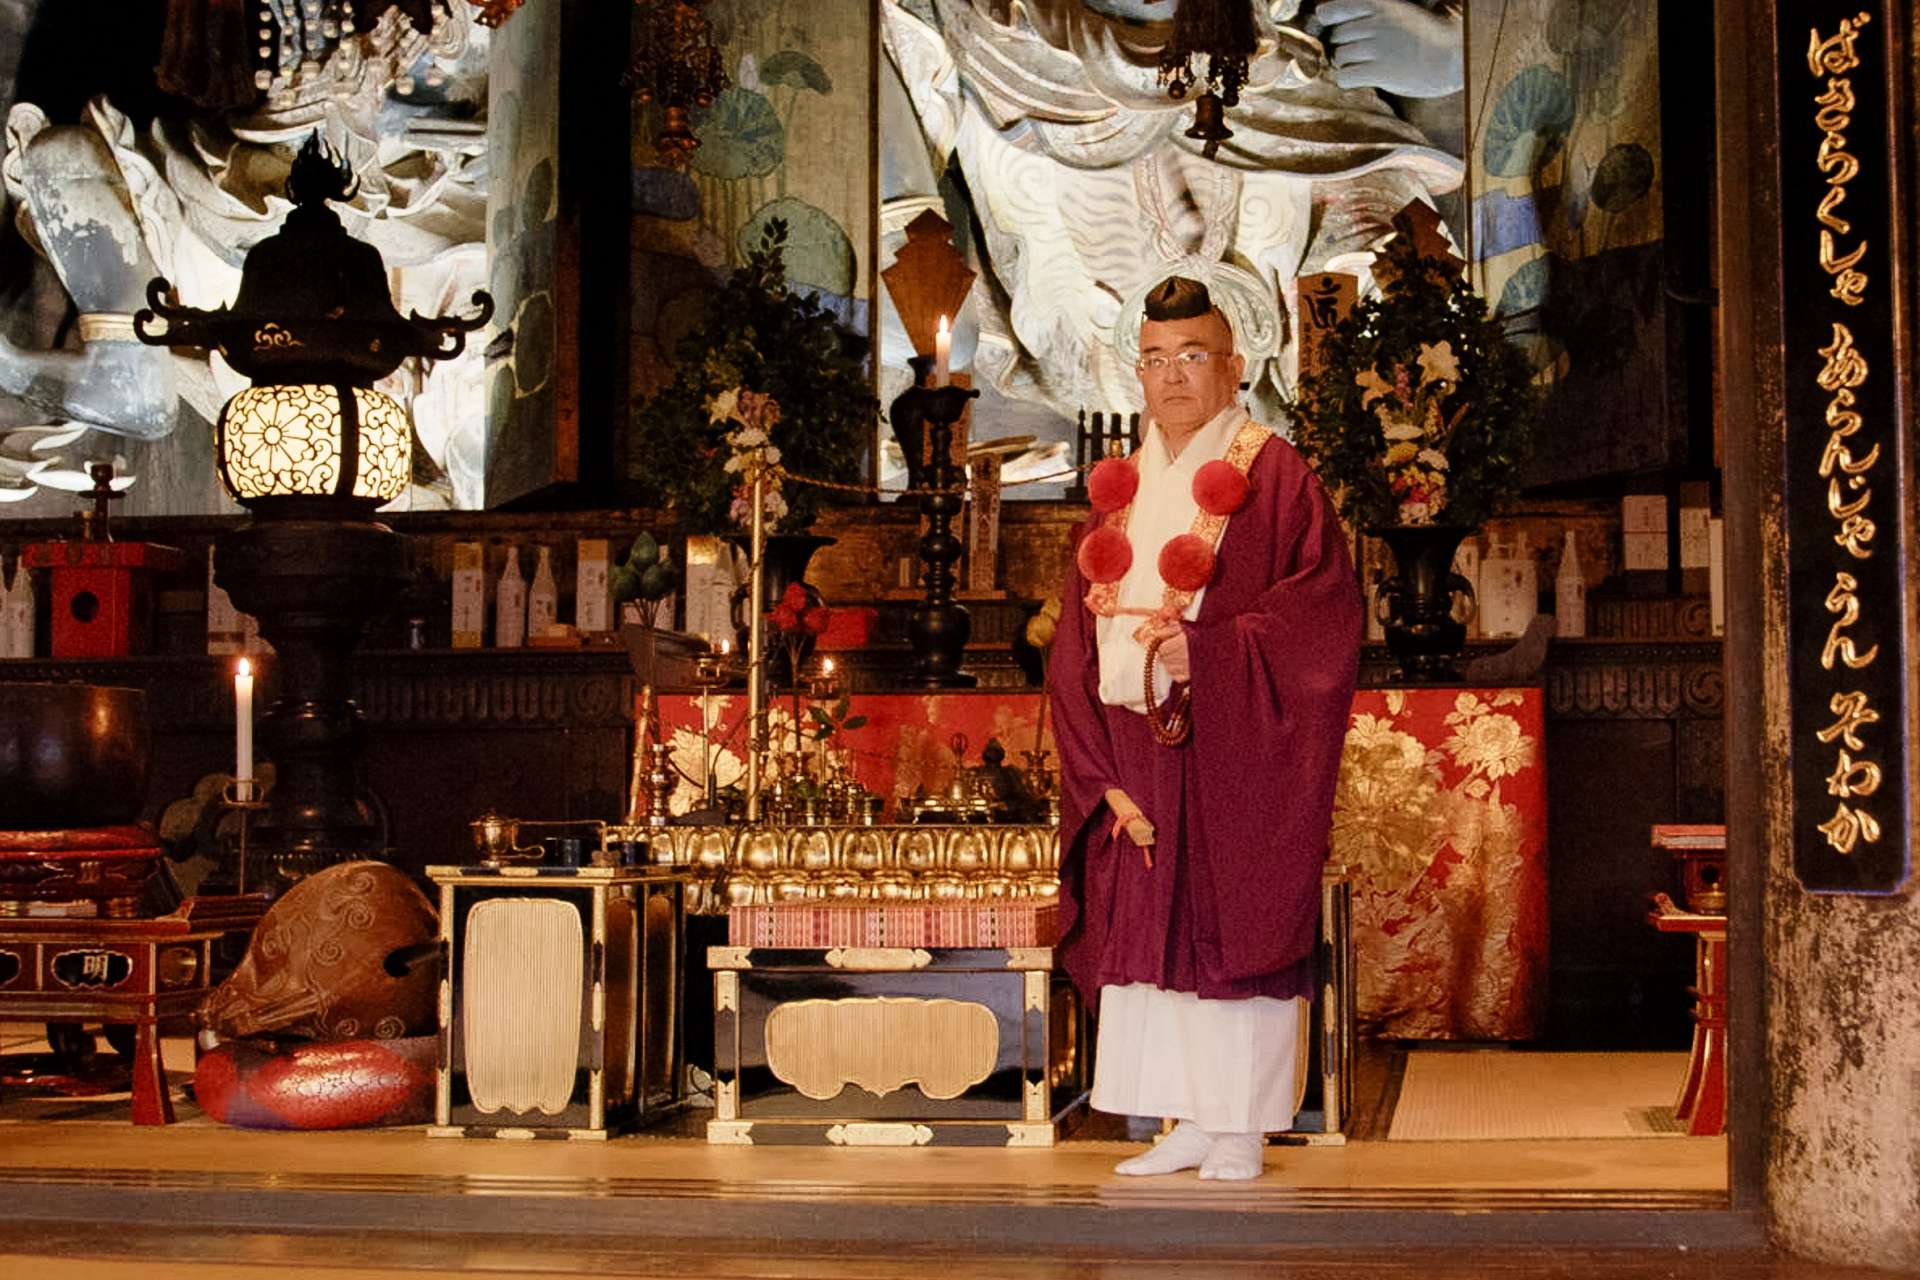 Experience the spirit of prayer at the Shugendo Konpon Dojo